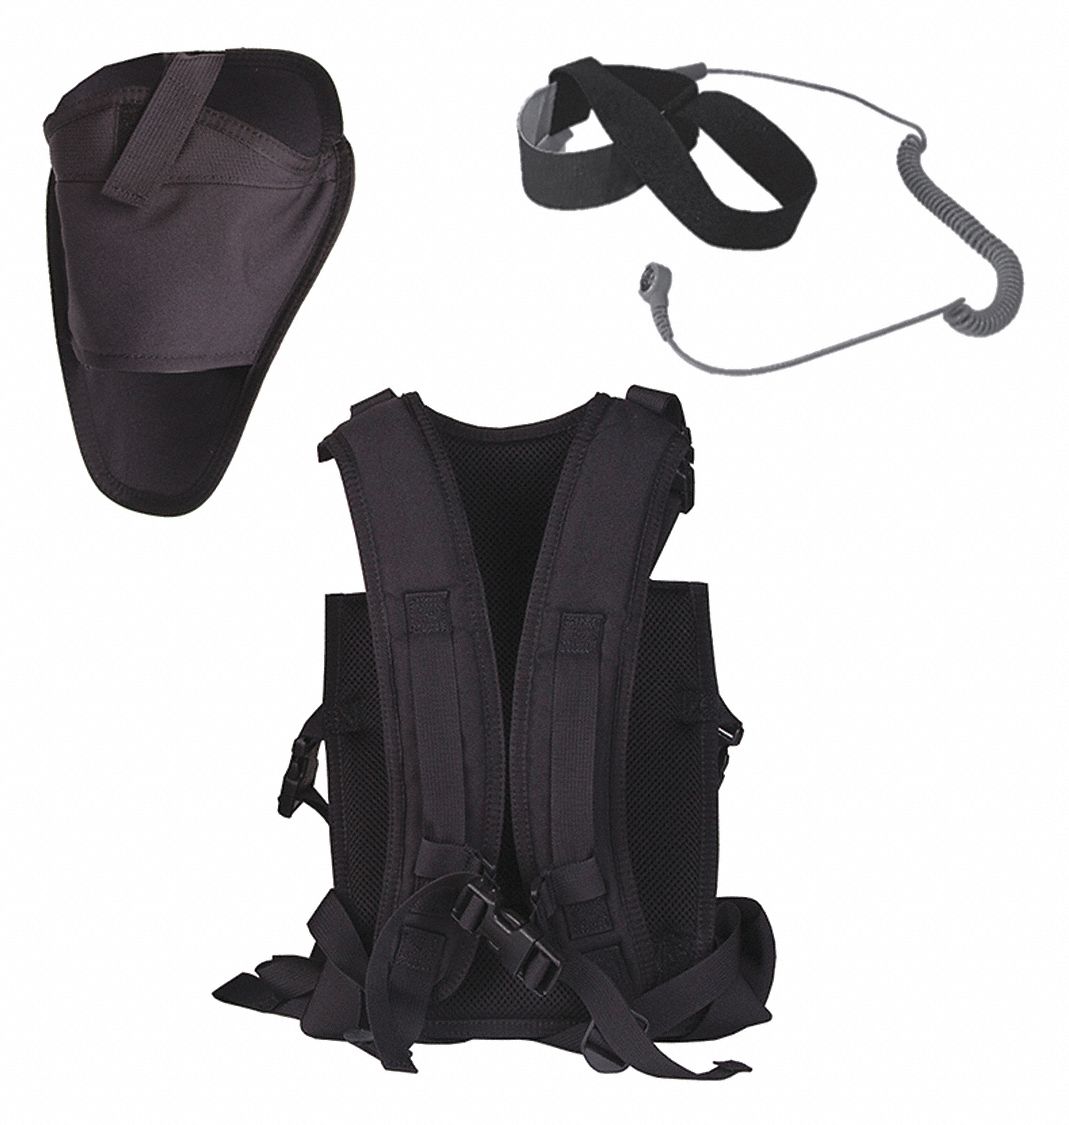 Backpack Conversion Kit